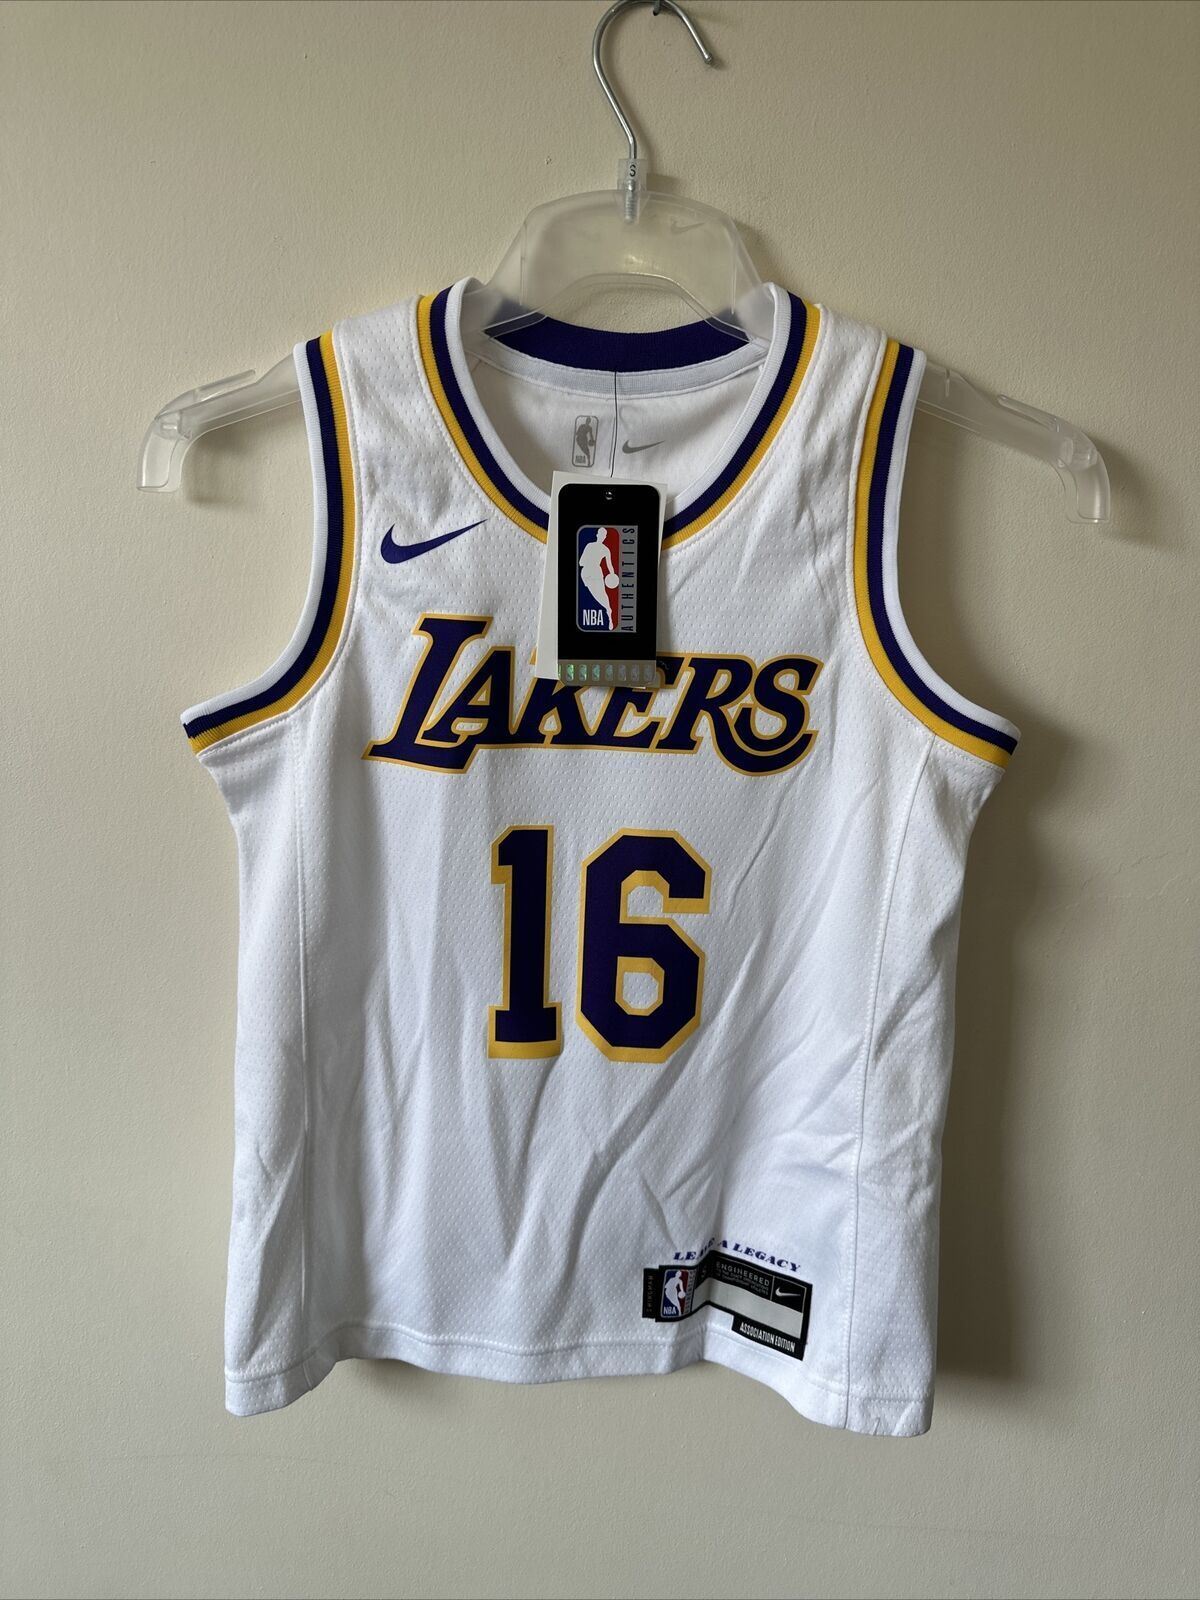 Nike NBA LA Lakers Association Edition Jersey ALVARO 16 L Youth 8-10 Years